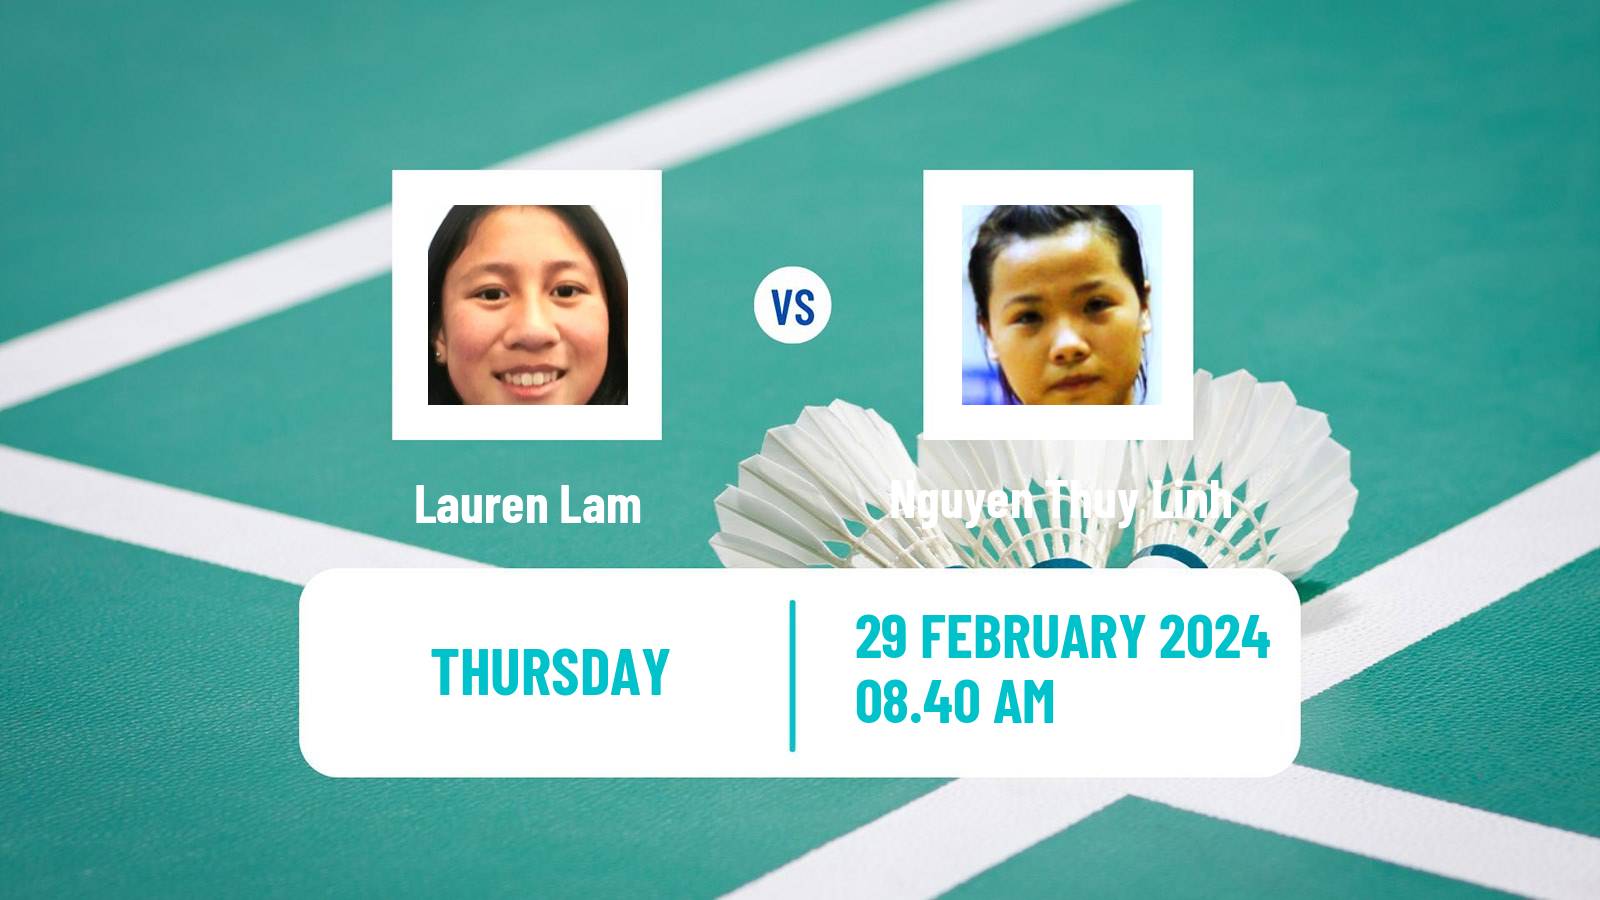 Badminton BWF World Tour German Open Women Lauren Lam - Nguyen Thuy Linh